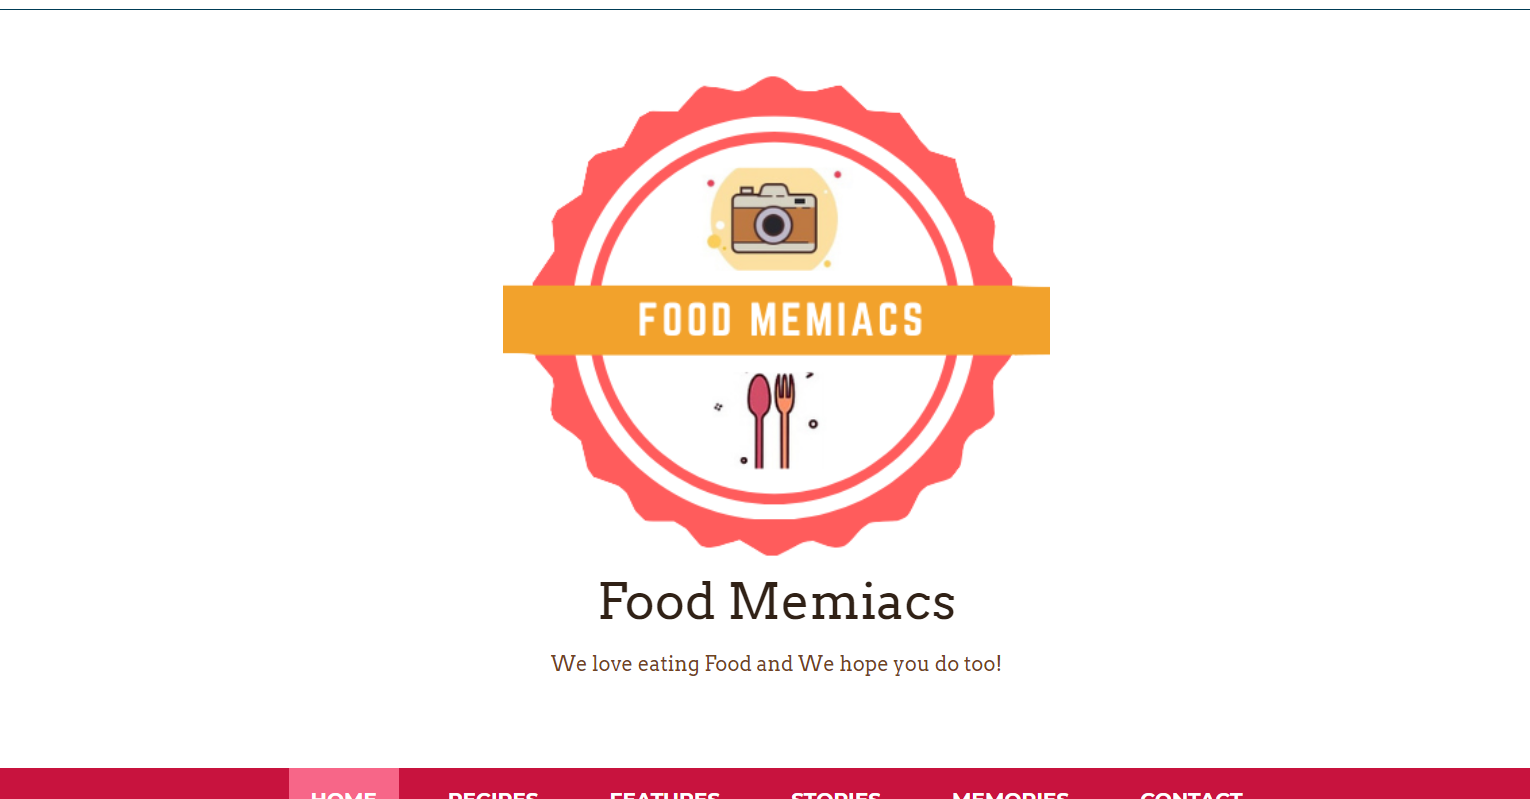 Food Memiacs